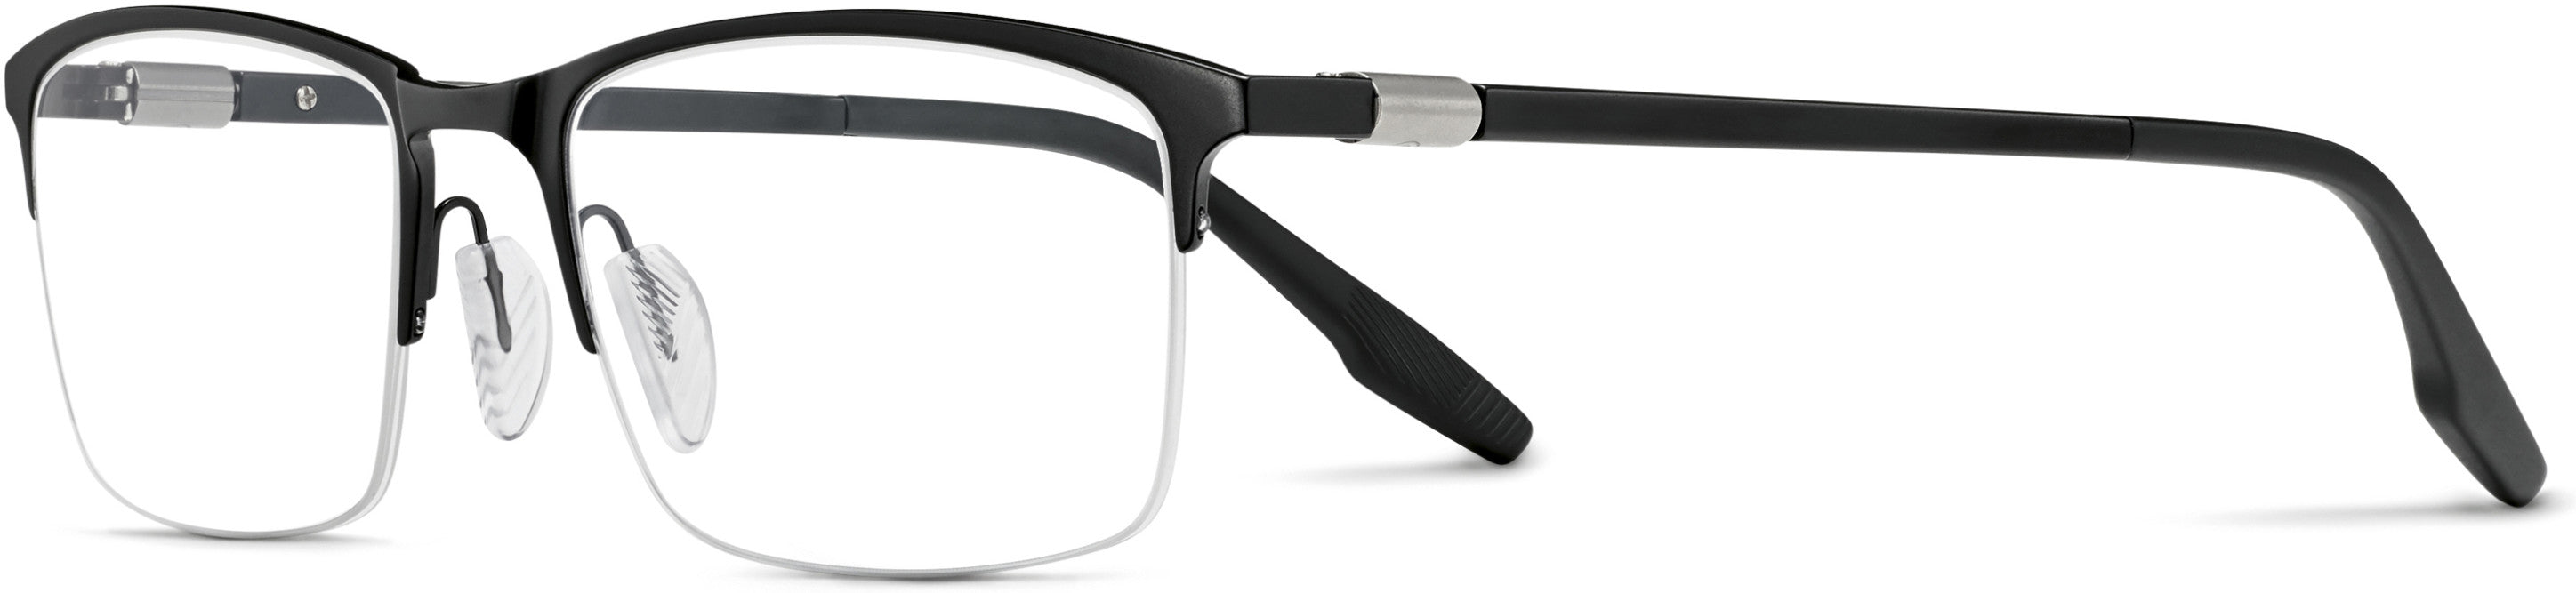 Safilo 2.0 Filo 01 Rectangular Eyeglasses 0003-0003  Matte Black (00 Demo Lens)